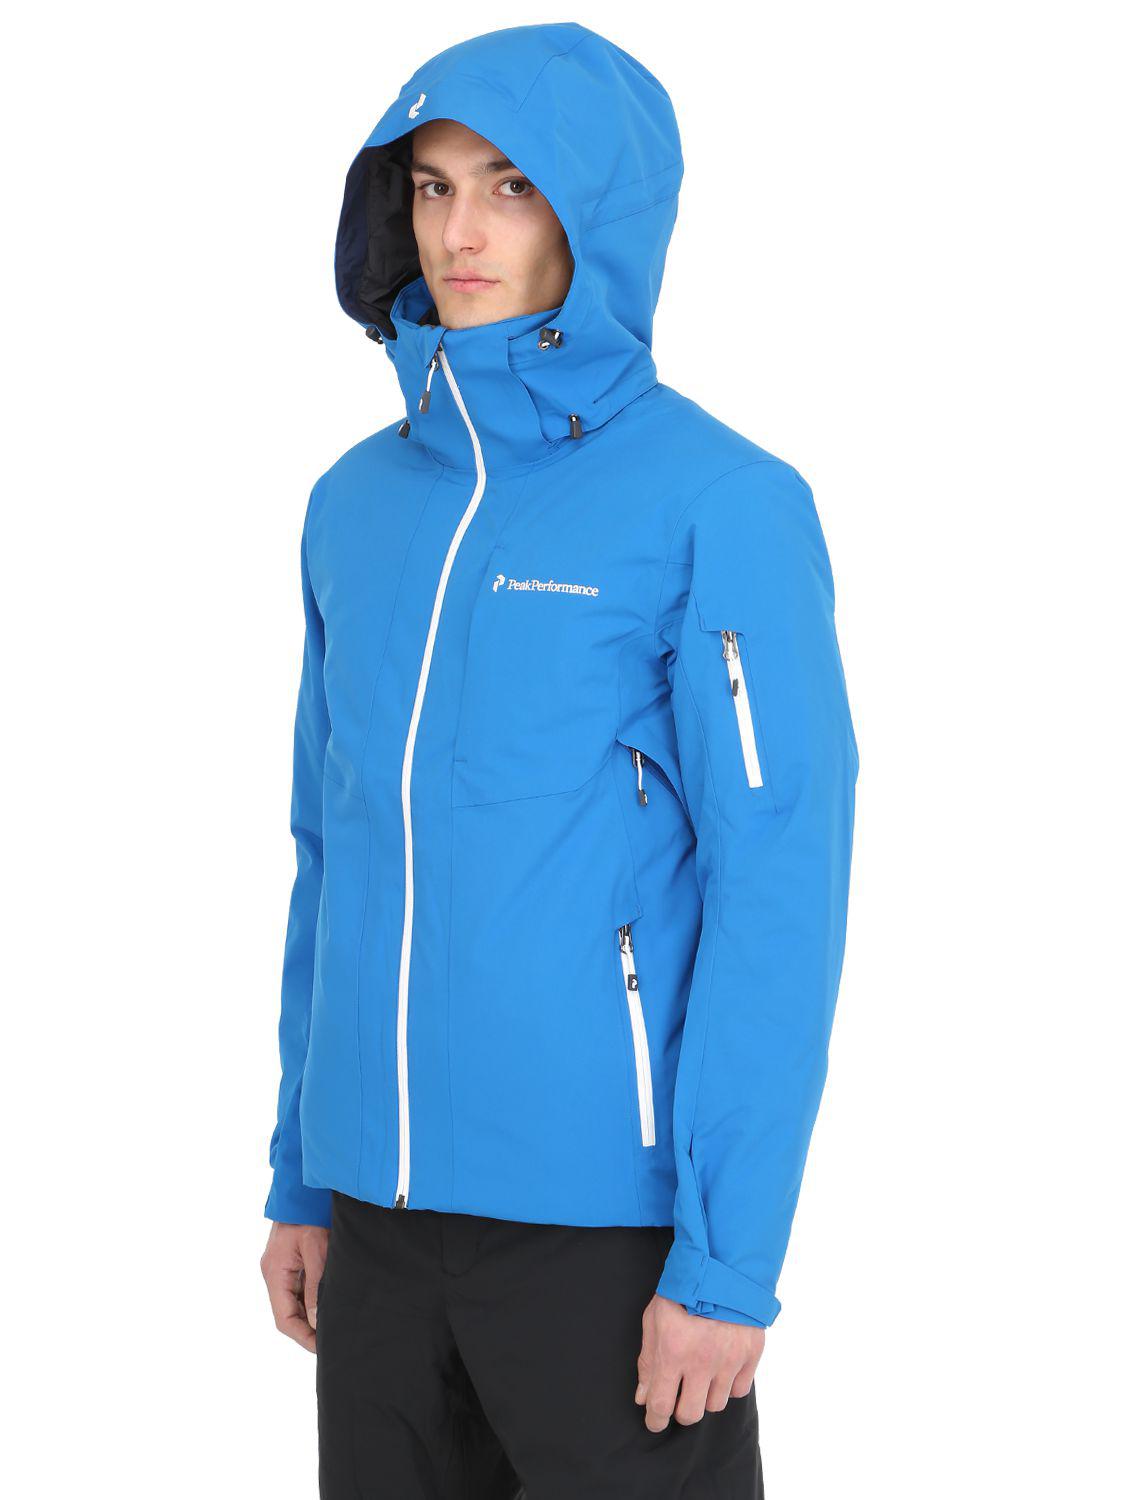 Peak Performance Maroon 2 Ski Jacket in Blue for Men - Lyst